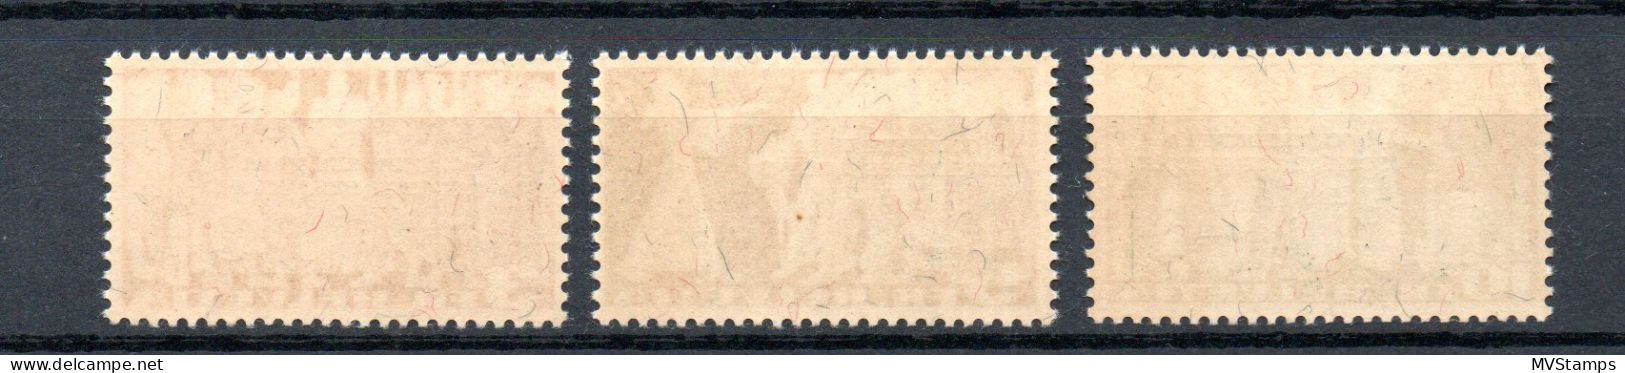 Switzerland 1939 Set Overprinted Service BIT/ILO Stamps (Michel 57/59) Used - Officials